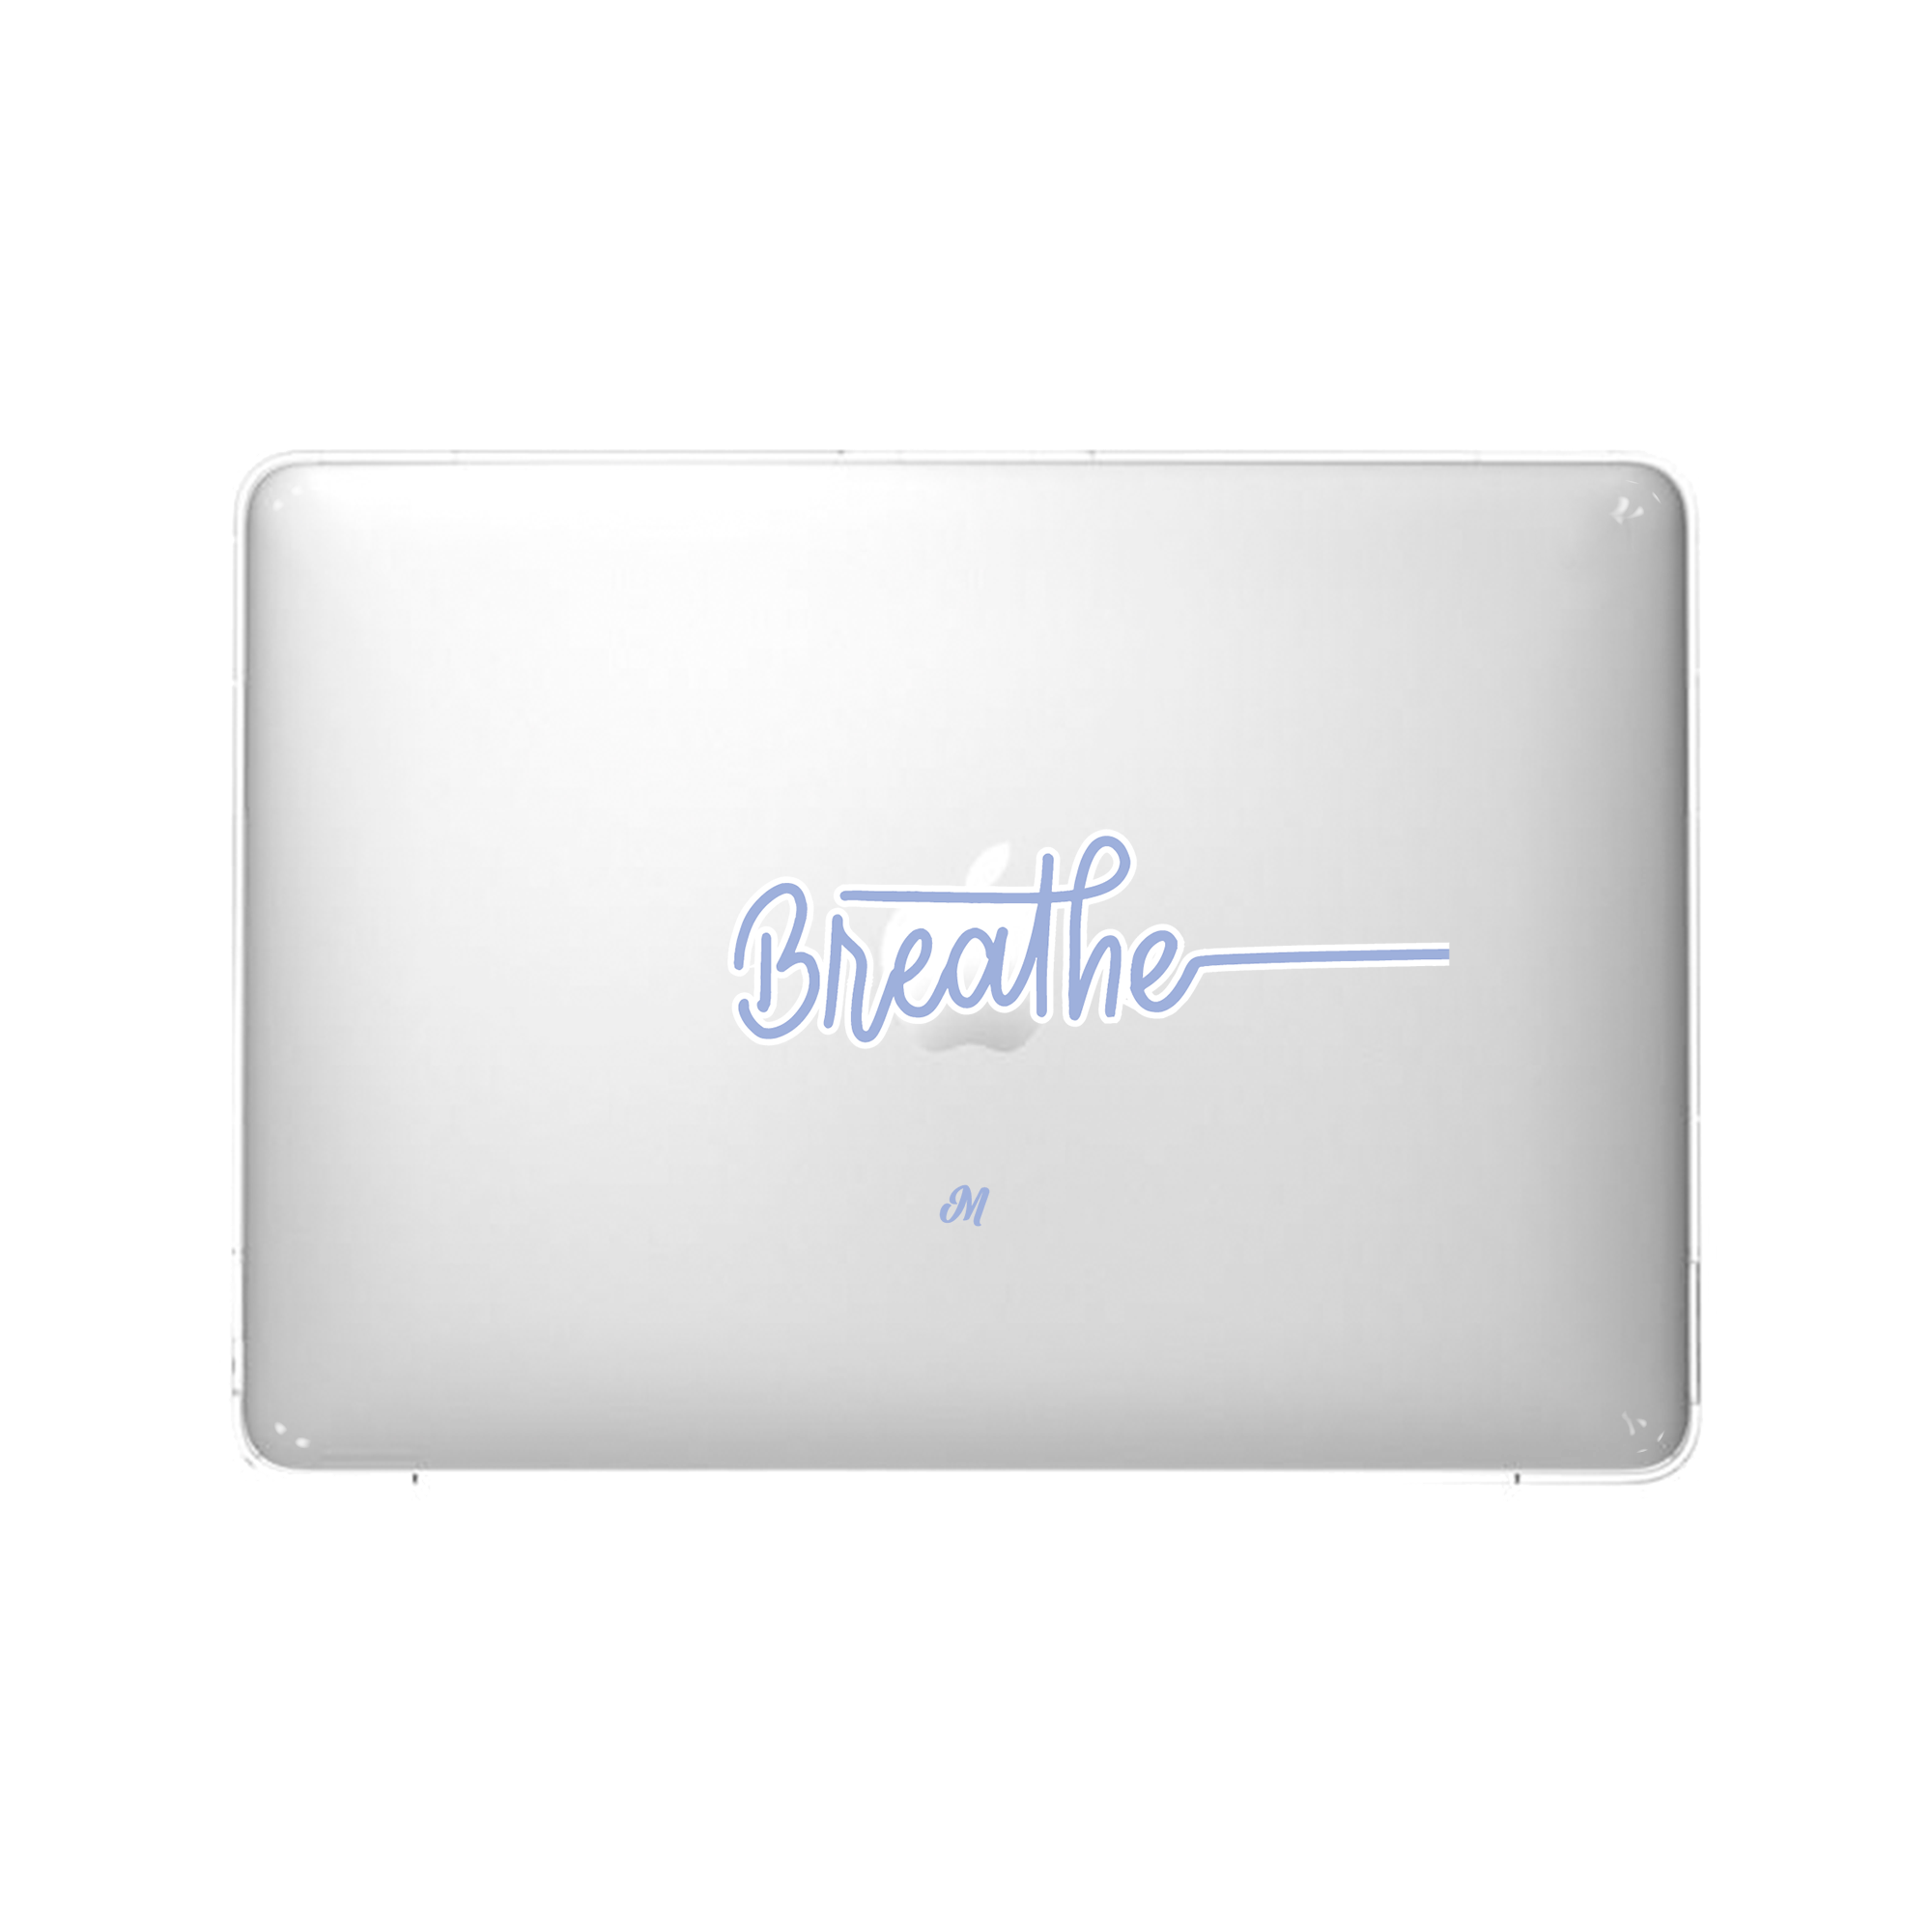 Respira MacBook Case - Mandala Cases